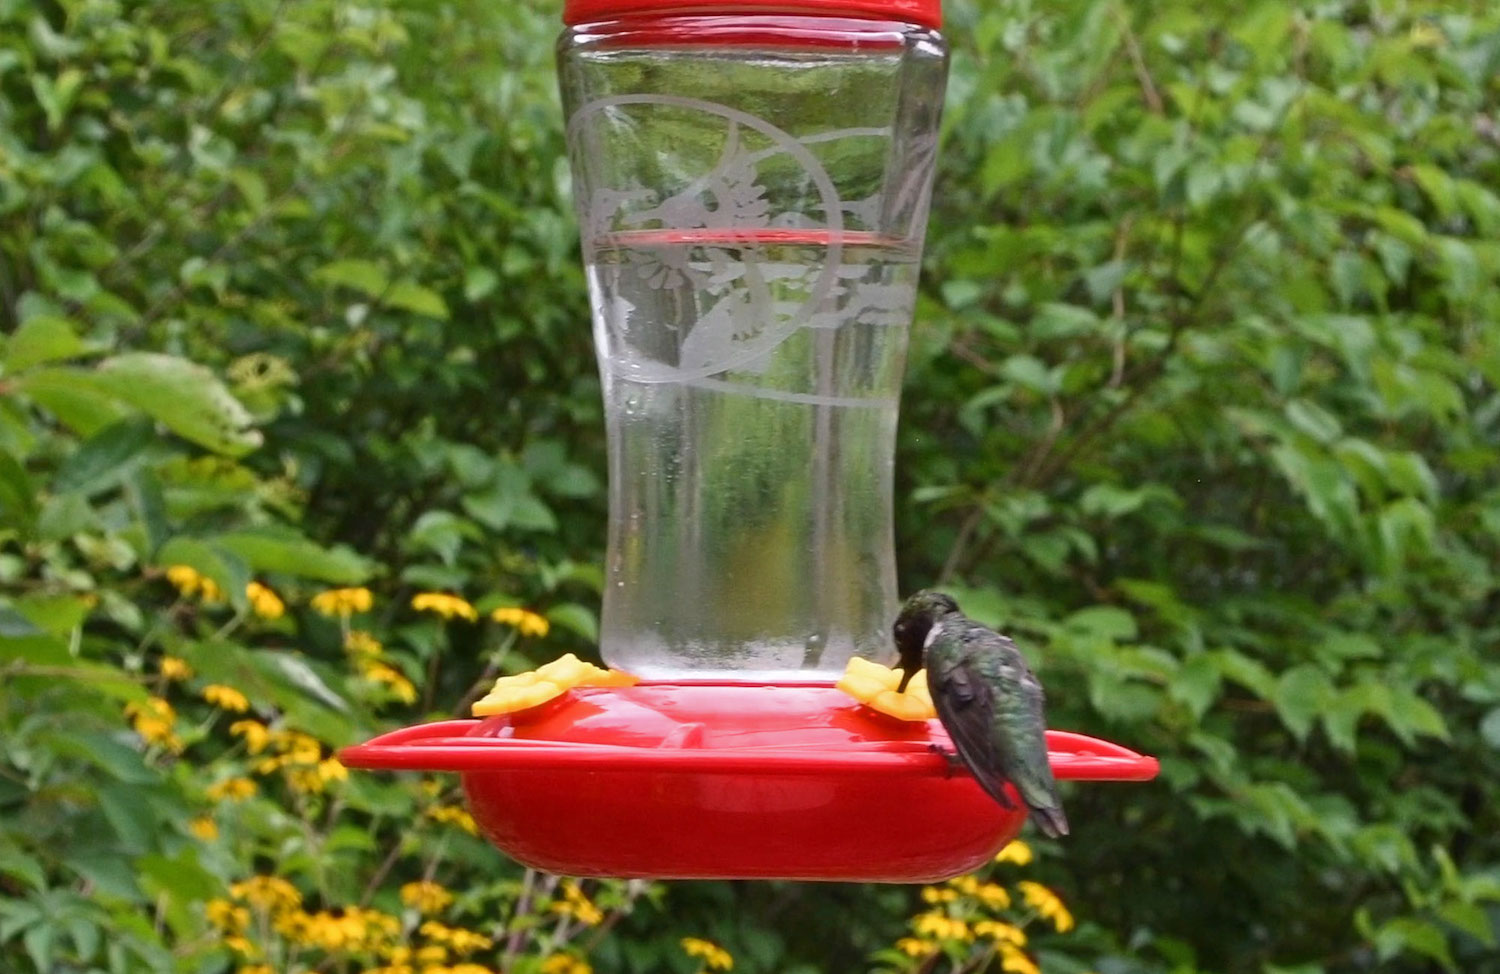 Ruby-throated hummingbird at a feeder